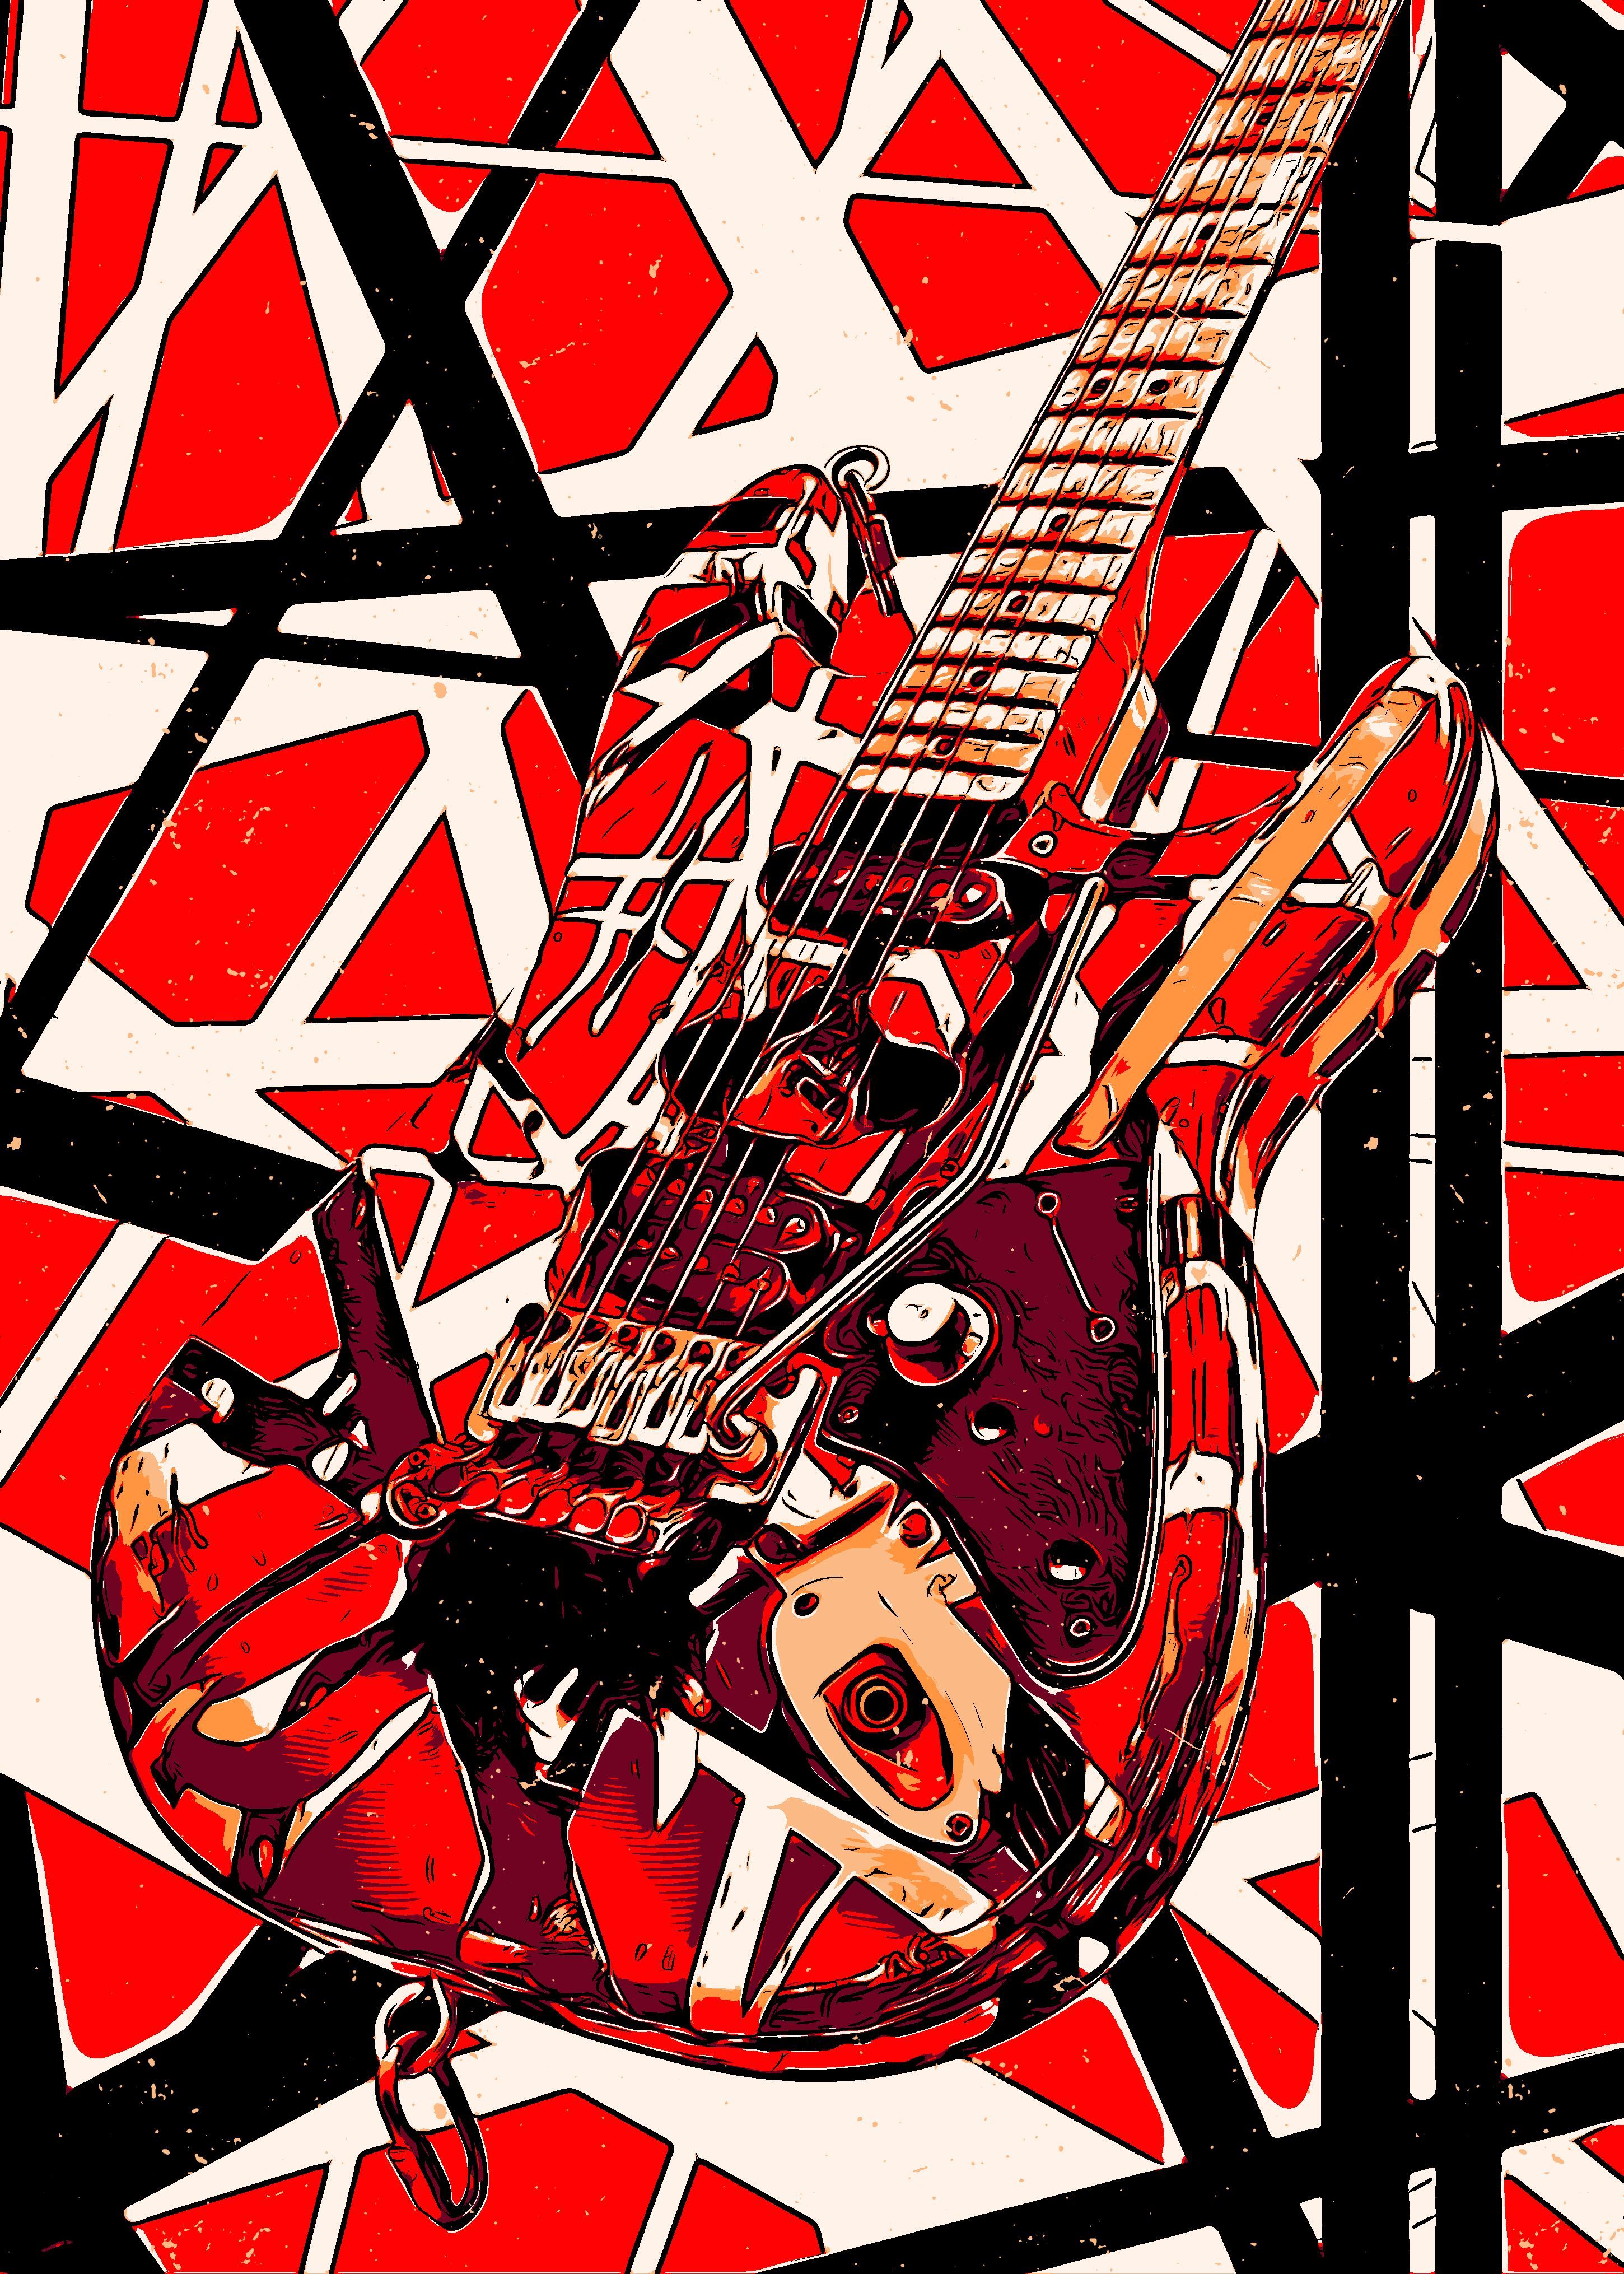 Eddie Van Halen Hintergrundbild 2900x4060. Eddie Van Halen Guitar Metal Poster. Eddie van halen, Rock n roll art, Eddie van halen guitar wallpaper